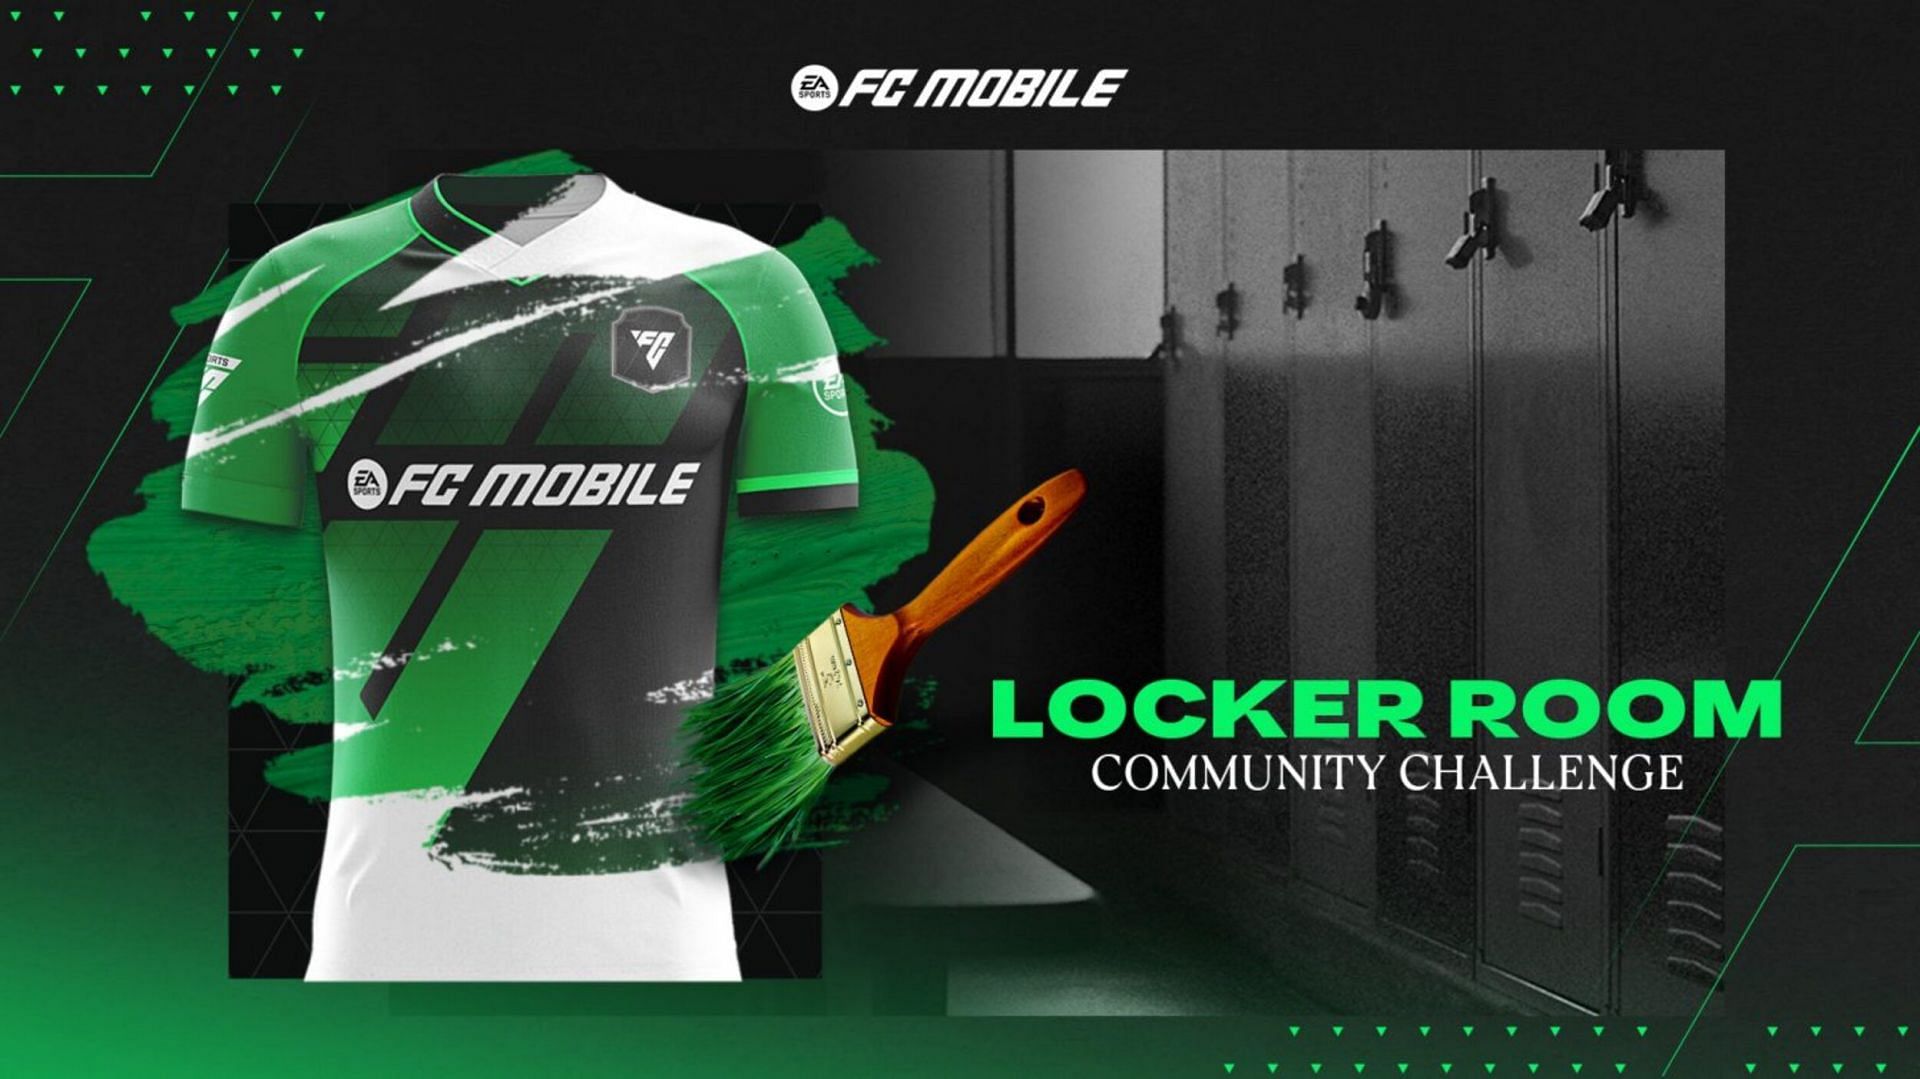 FC Mobile Locker Room Community Challenge is live